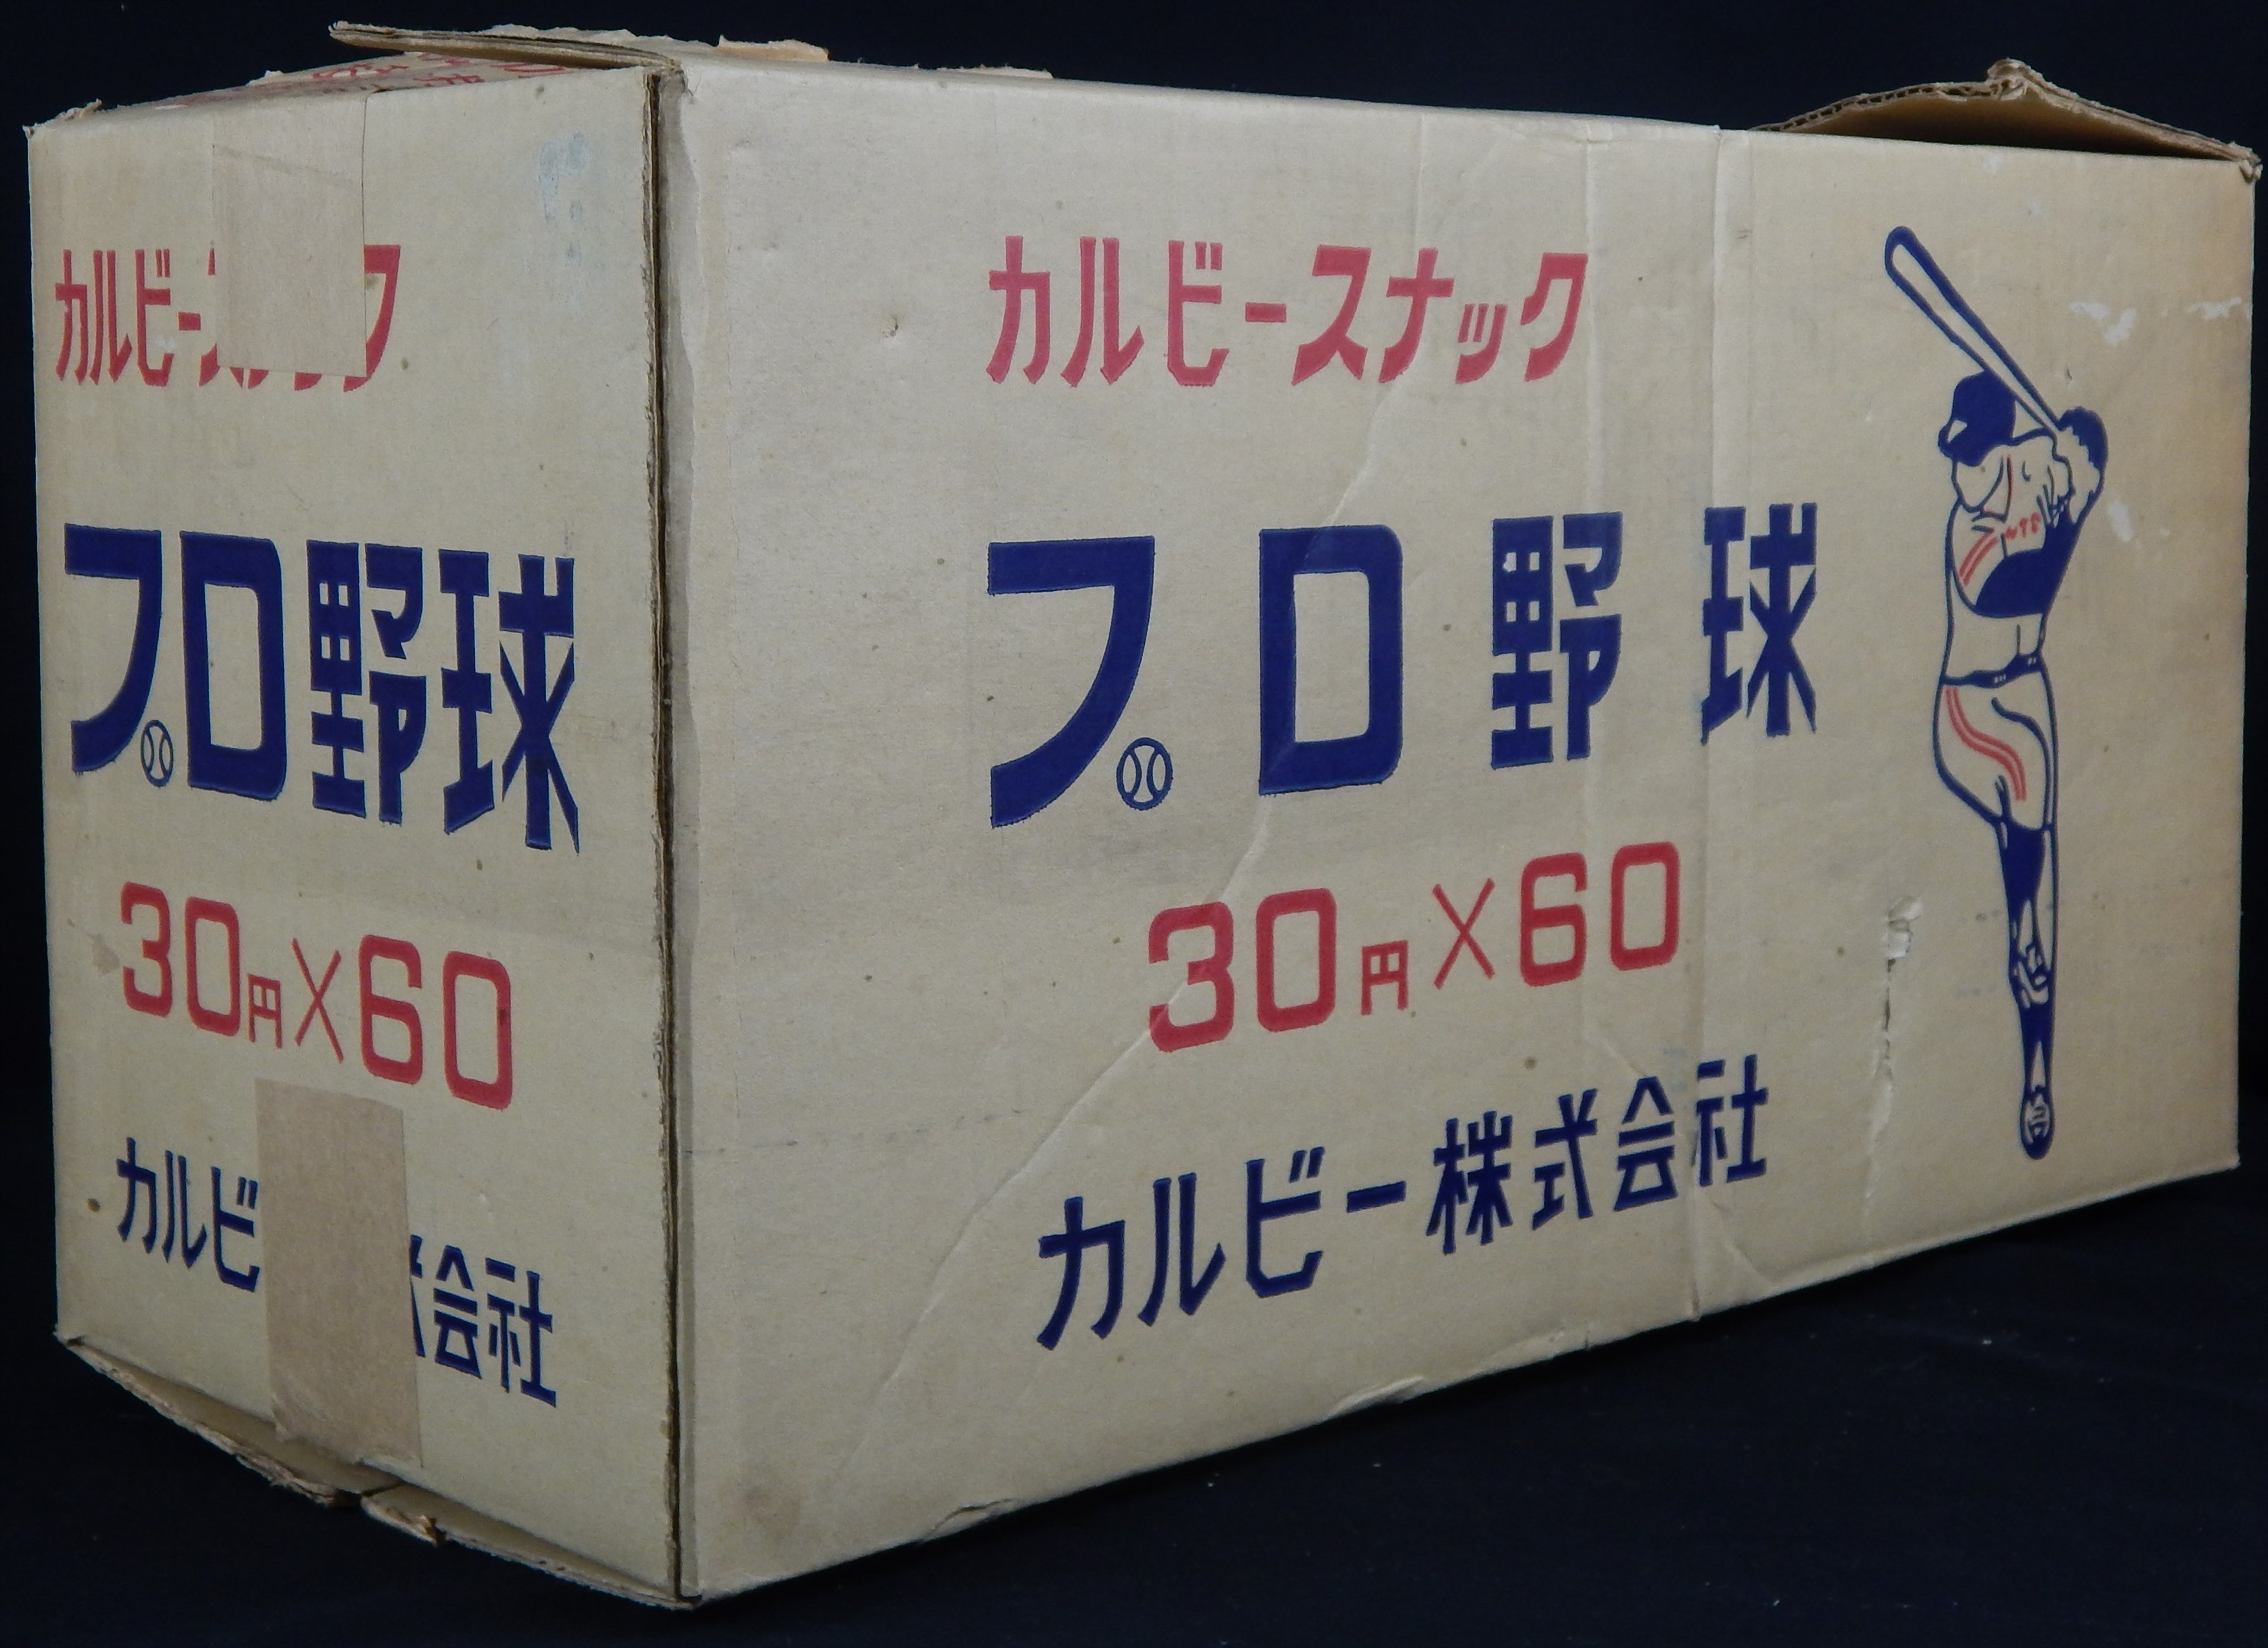 Negro League, Latin, Japanese & International Base - Circa 1973 Calbee Snack Cases Boxes (2)